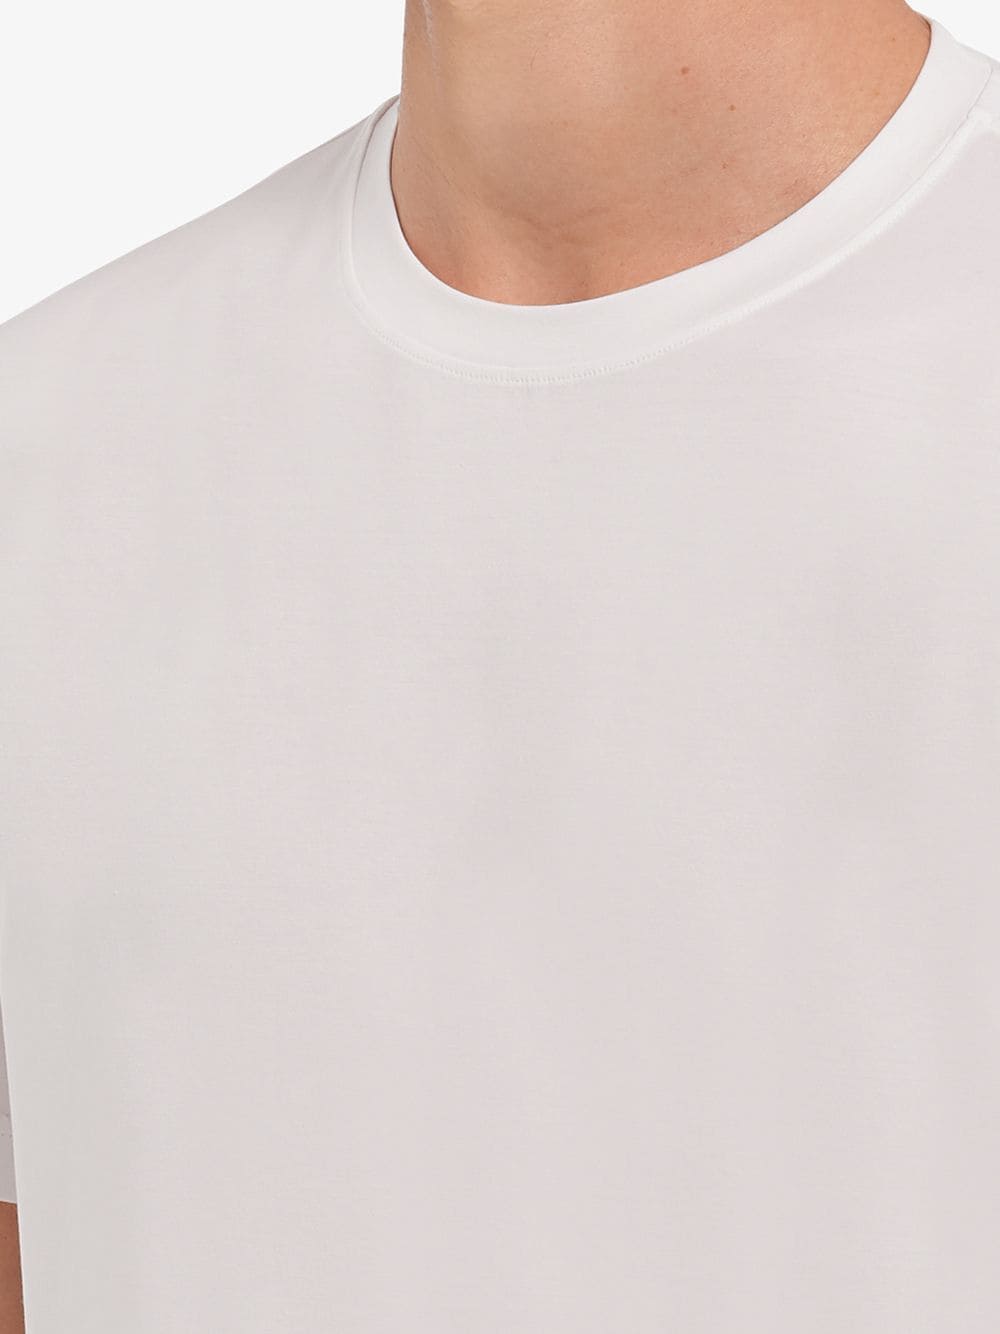 PRADA classic fitted t-shirt white-14